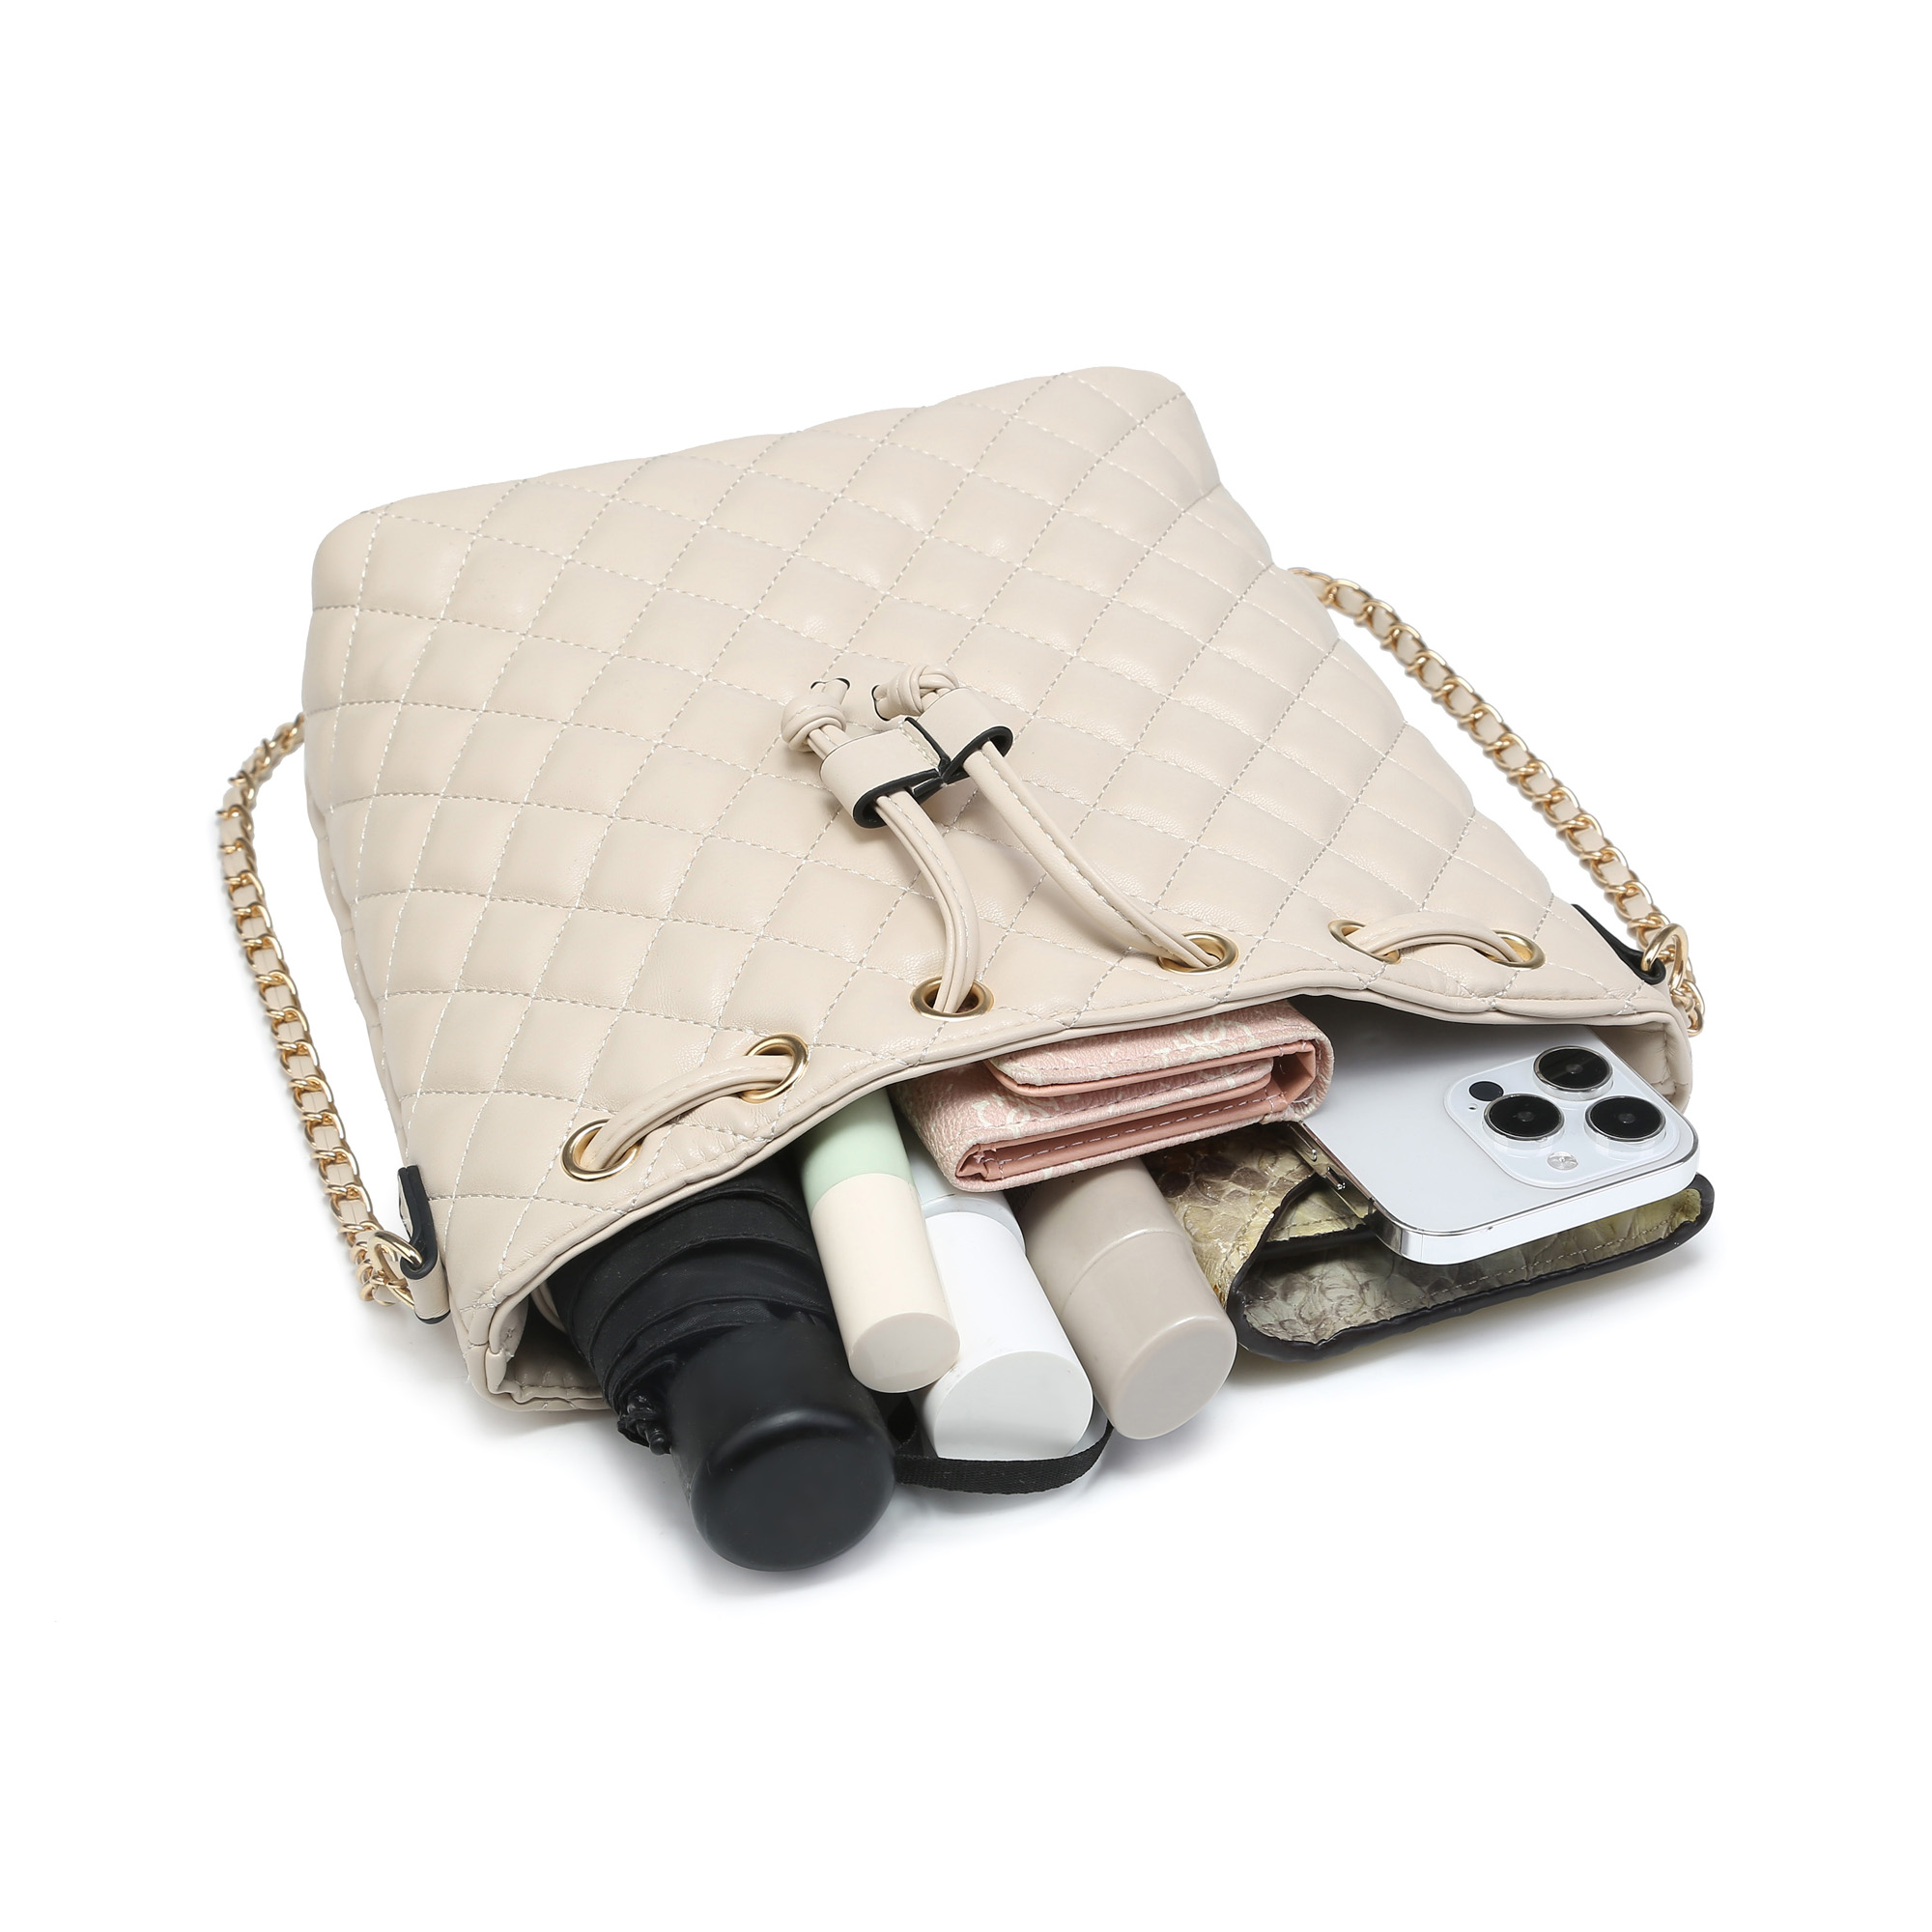 Poppy Womens Leather Quilted Crossbody Bag Handbags Purses Drawstring Bucket Shoulder Bag Satchels Messenger Bag - image 4 of 5